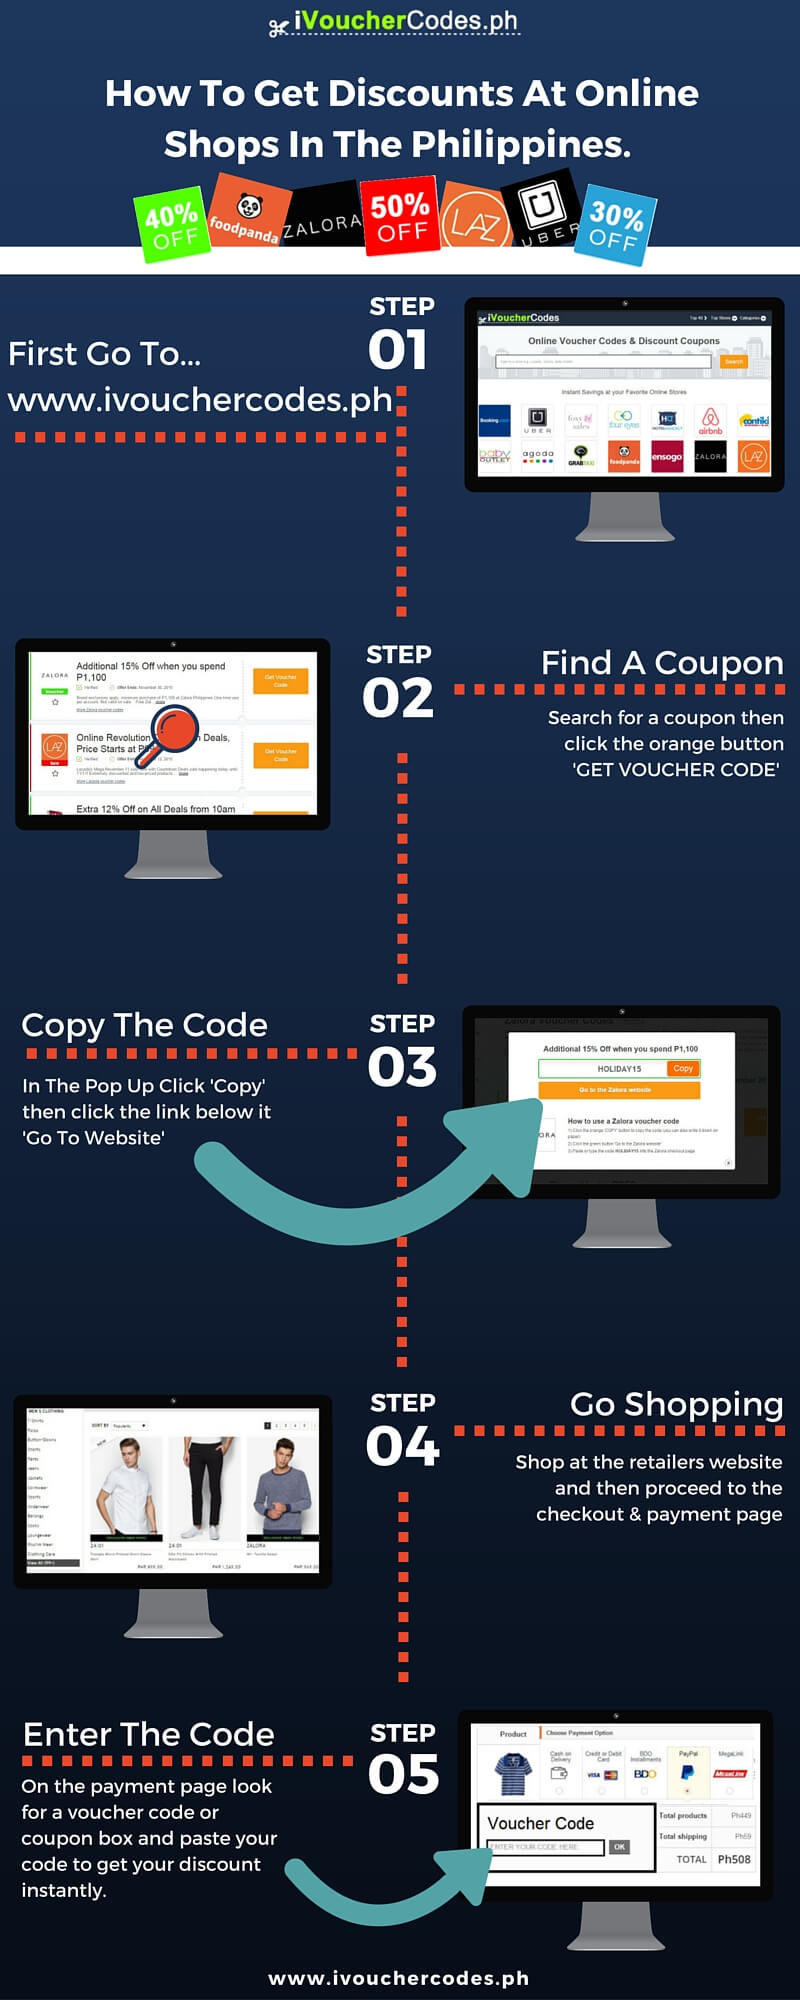 using voucher codes to get online discounts